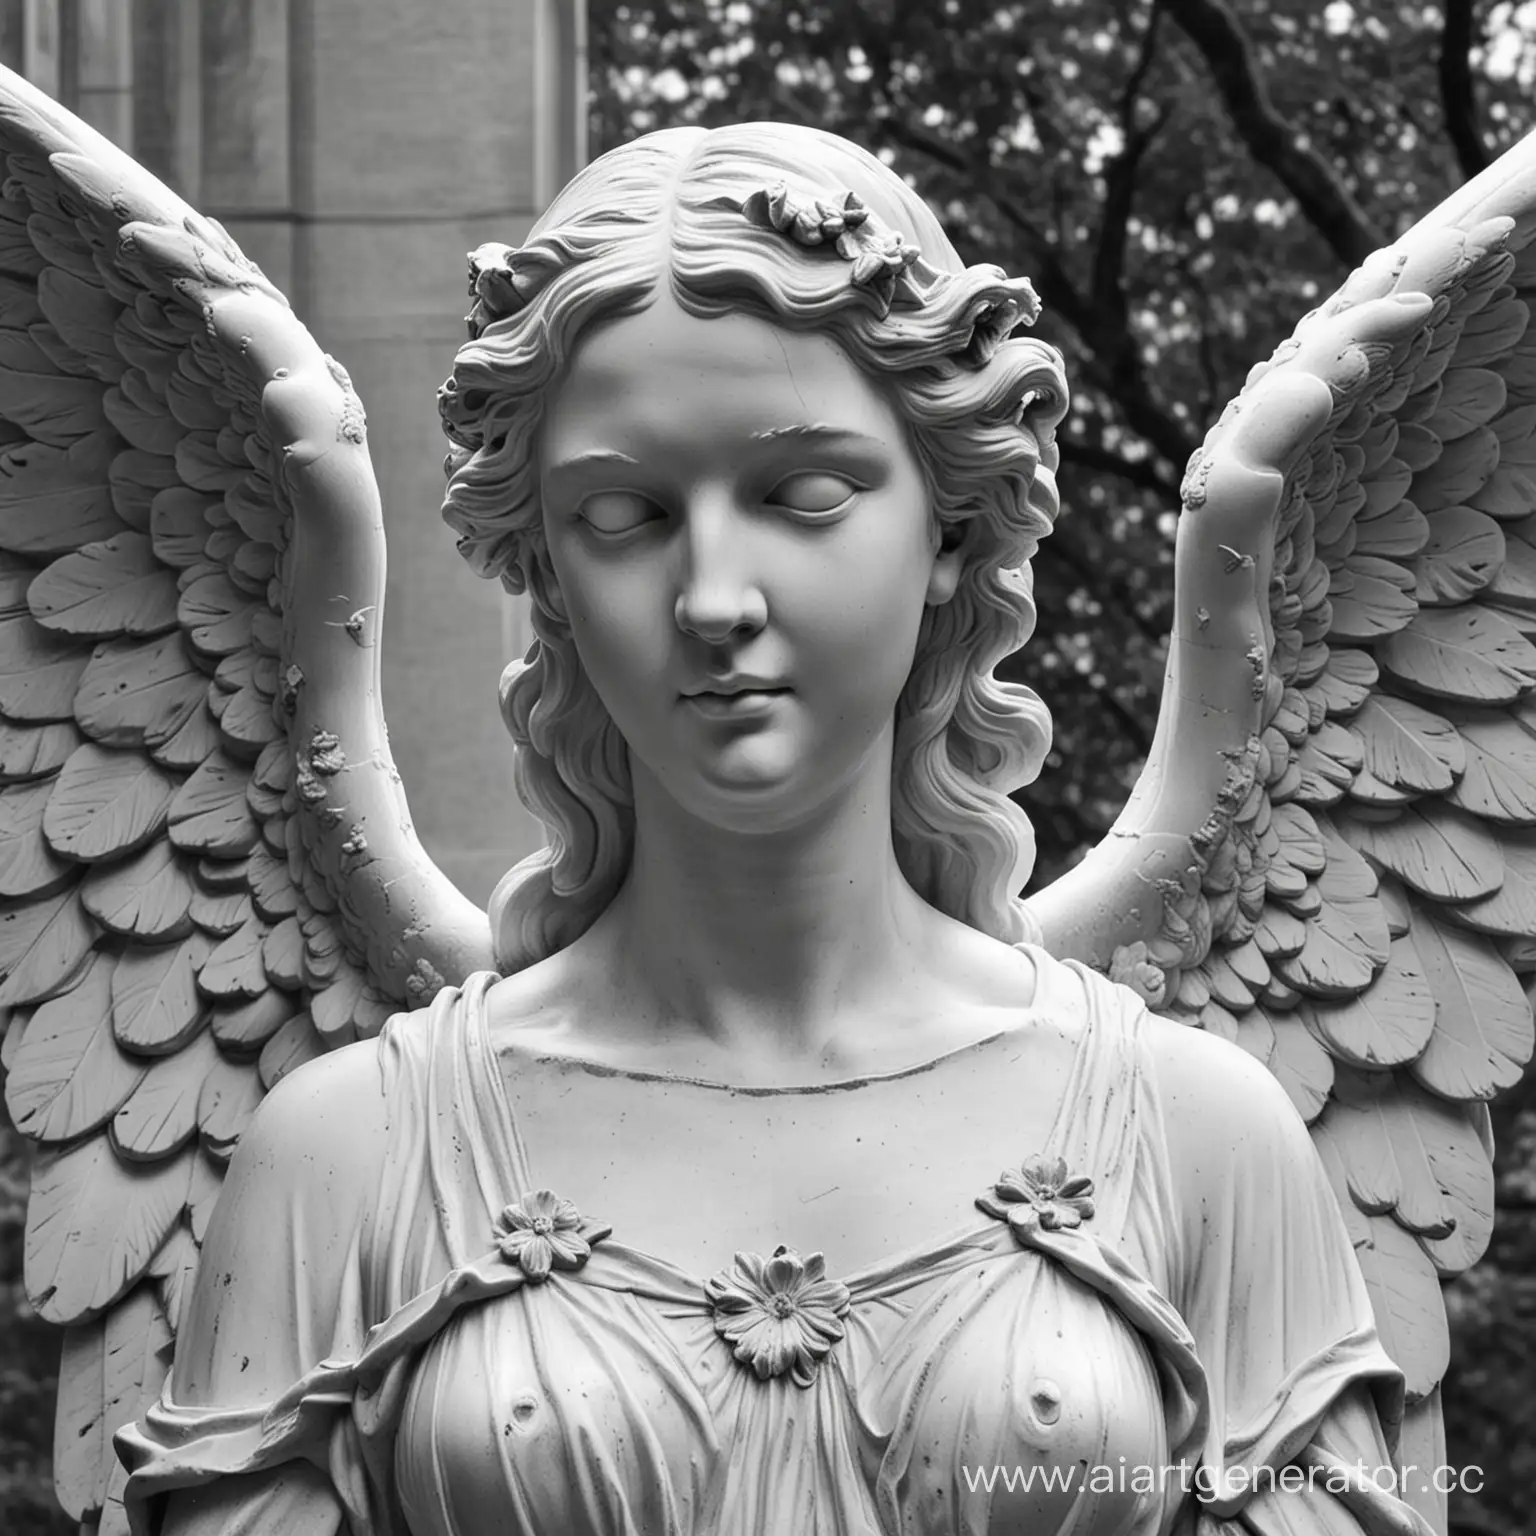 create a photo of an angel statue